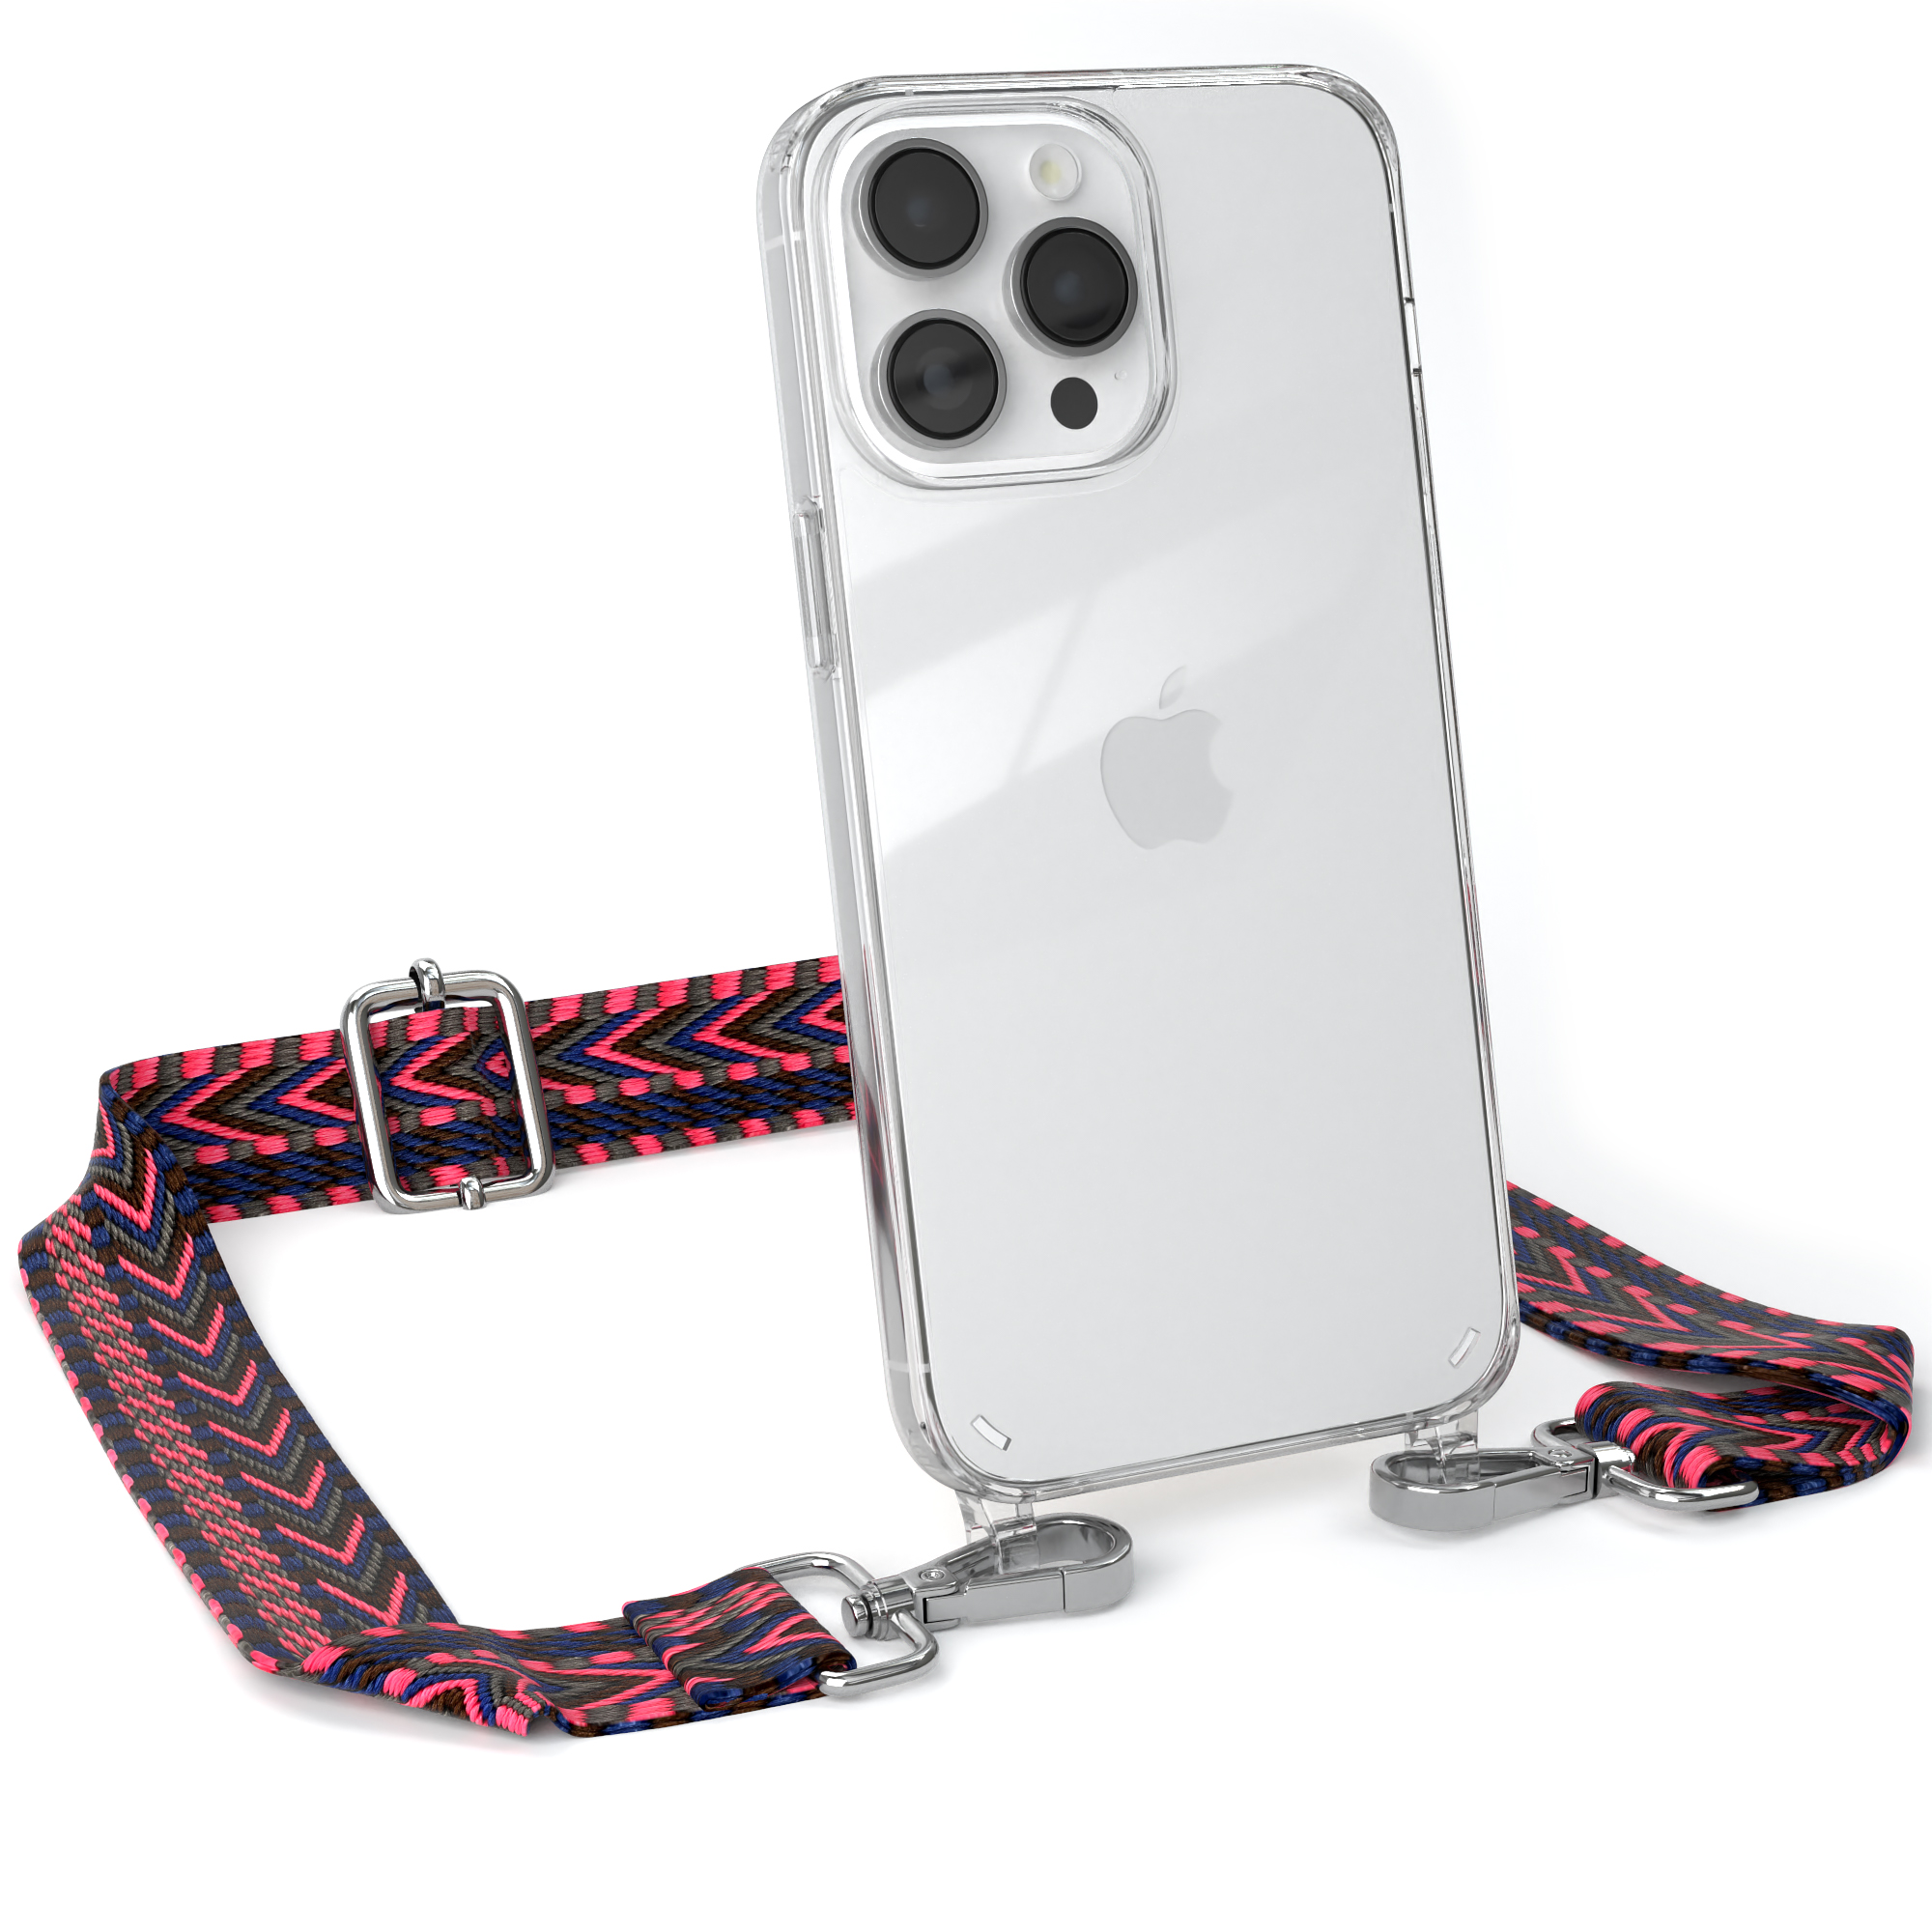 EAZY CASE Transparente Handyhülle mit Max, Pink iPhone 14 Boho Style, Pro Apple, Kordel Blau Umhängetasche, 